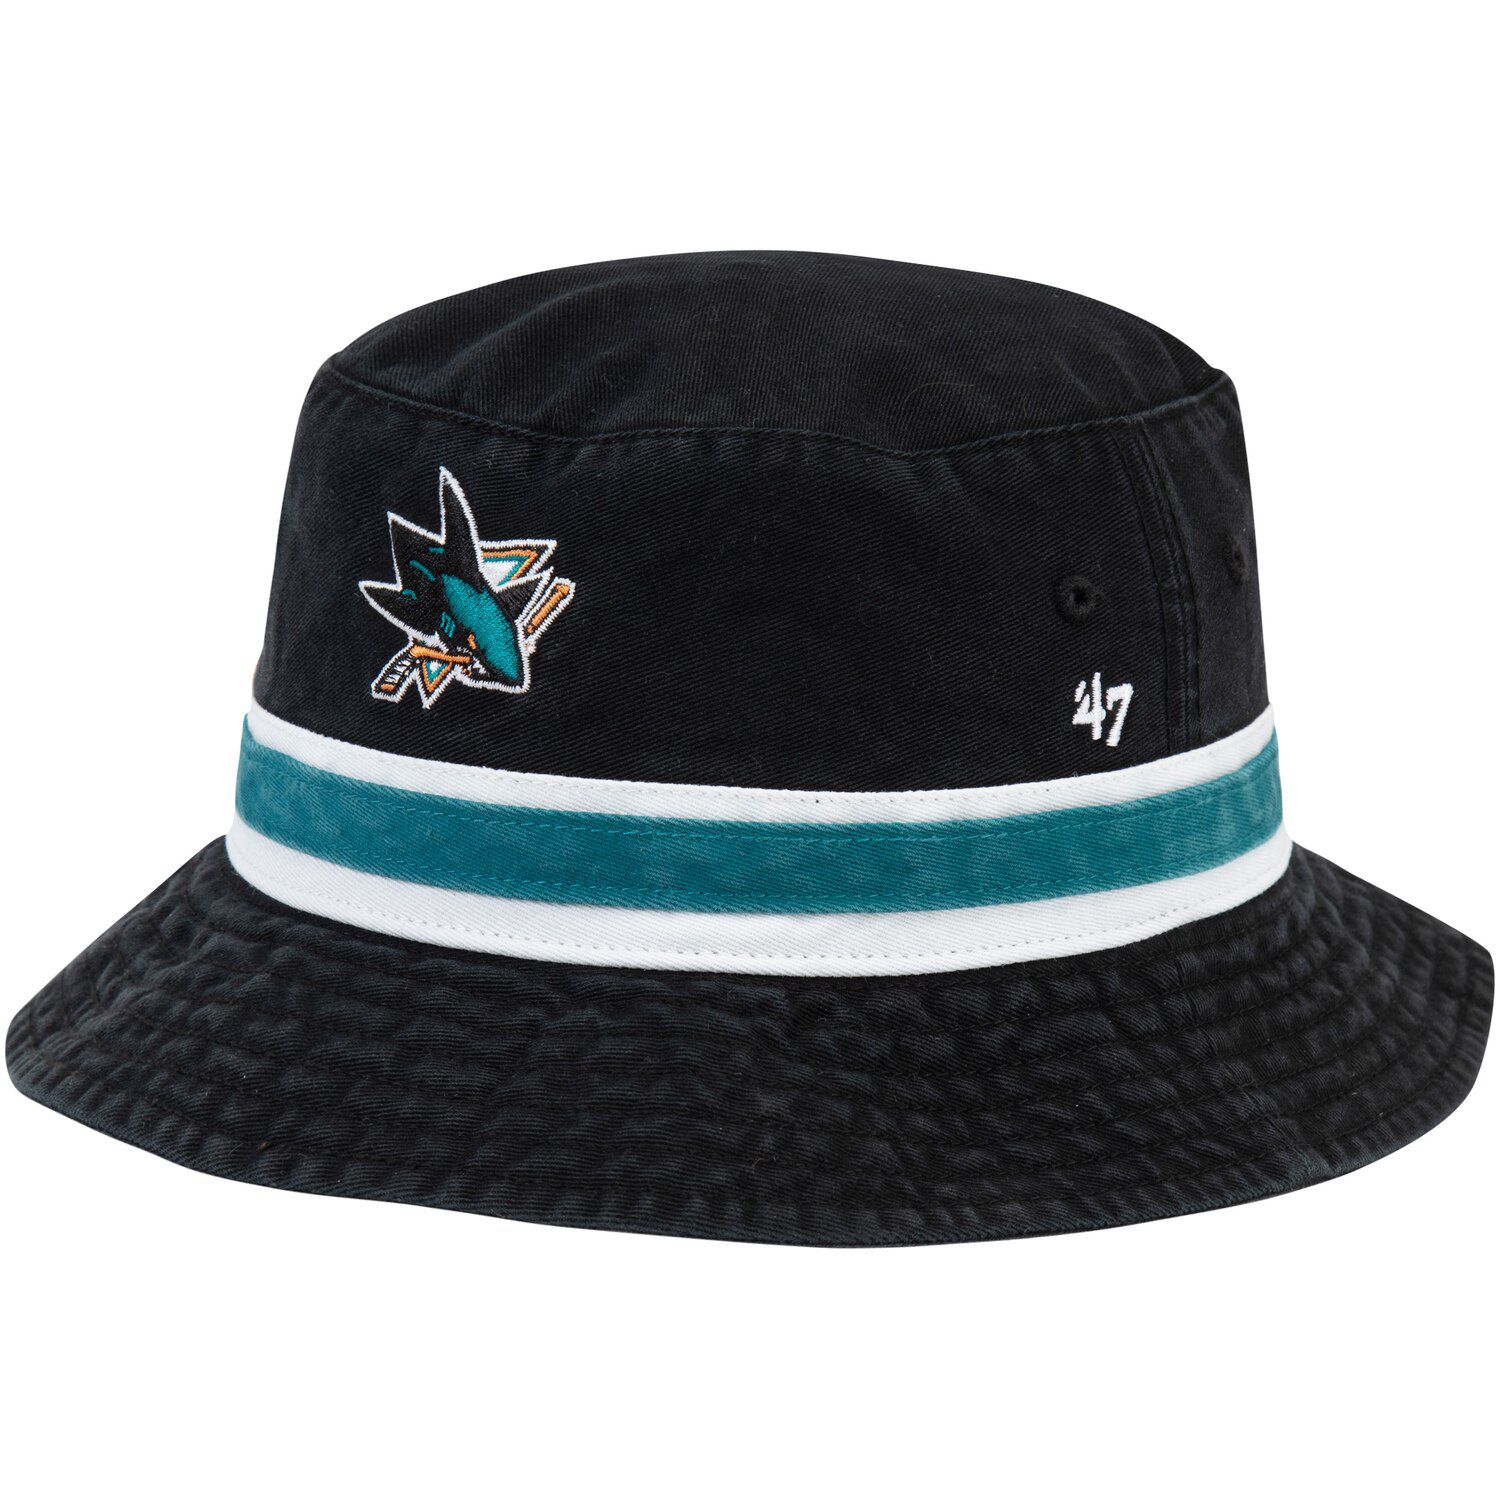 Black San Jose Sharks Striped Bucket Hat